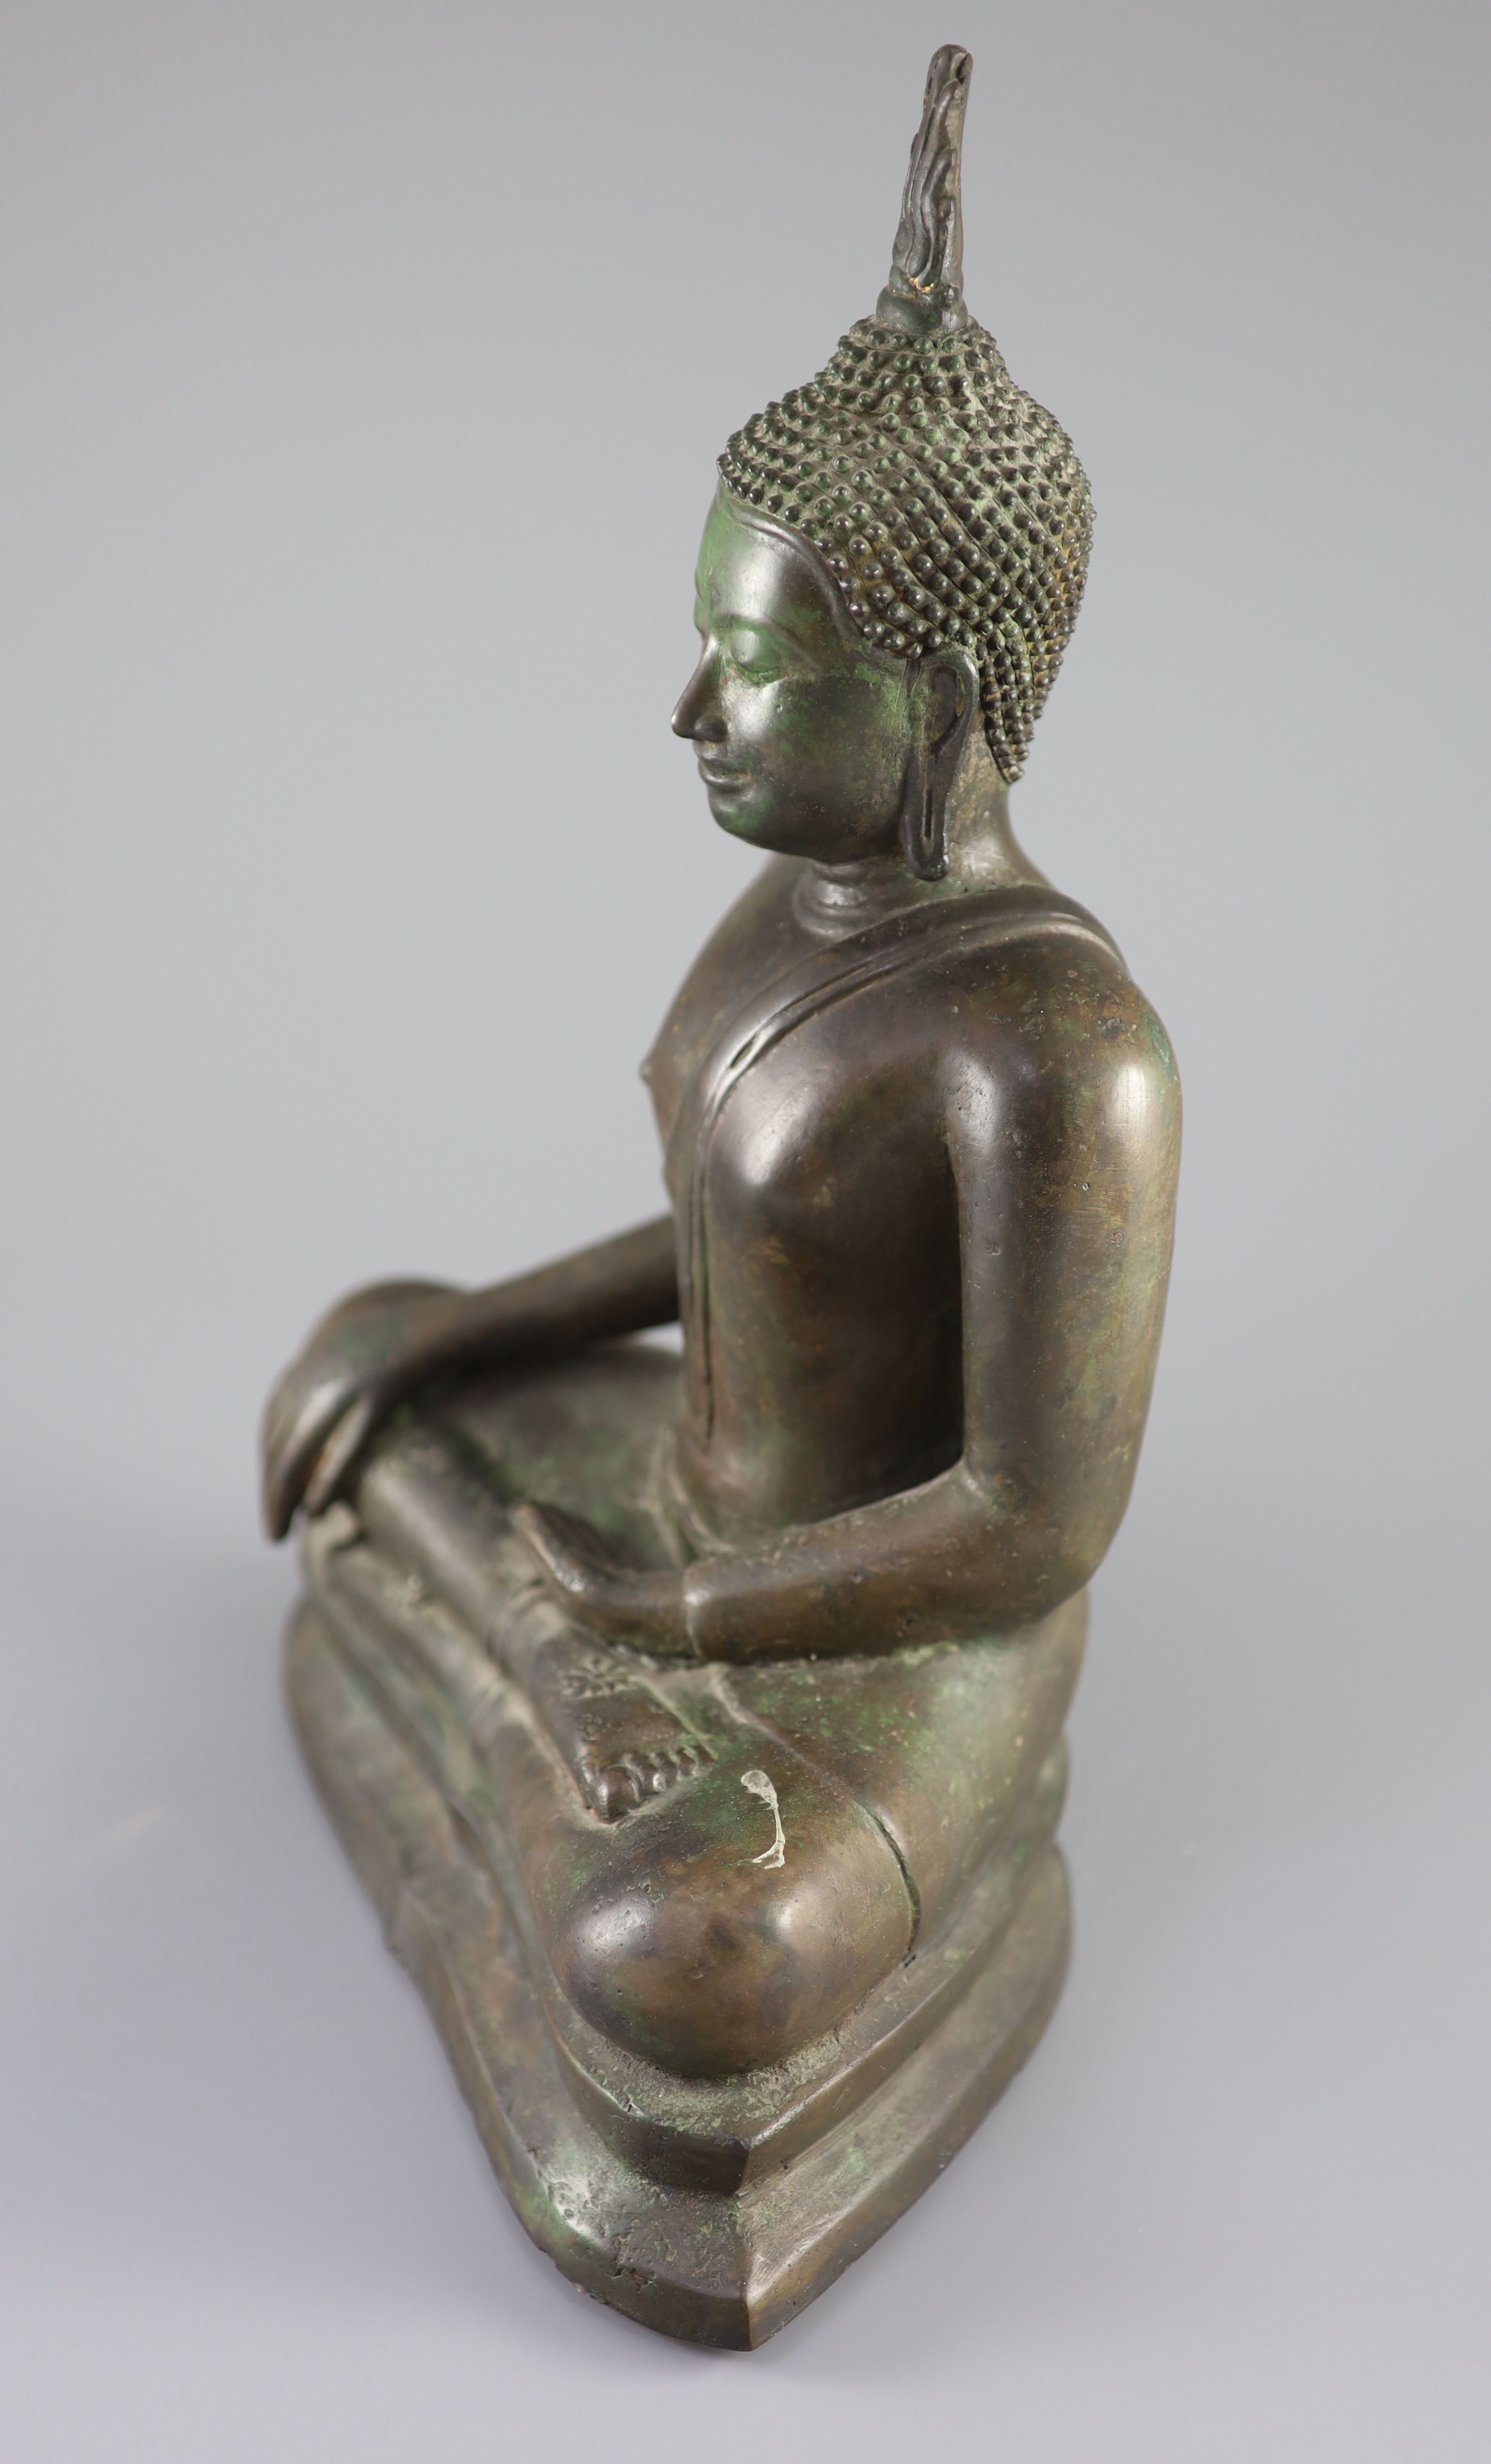 A large Thai bronze seated figure of Buddha Shakyamuni, Ayutthaya Period, 17th/18th century, 36 cm high